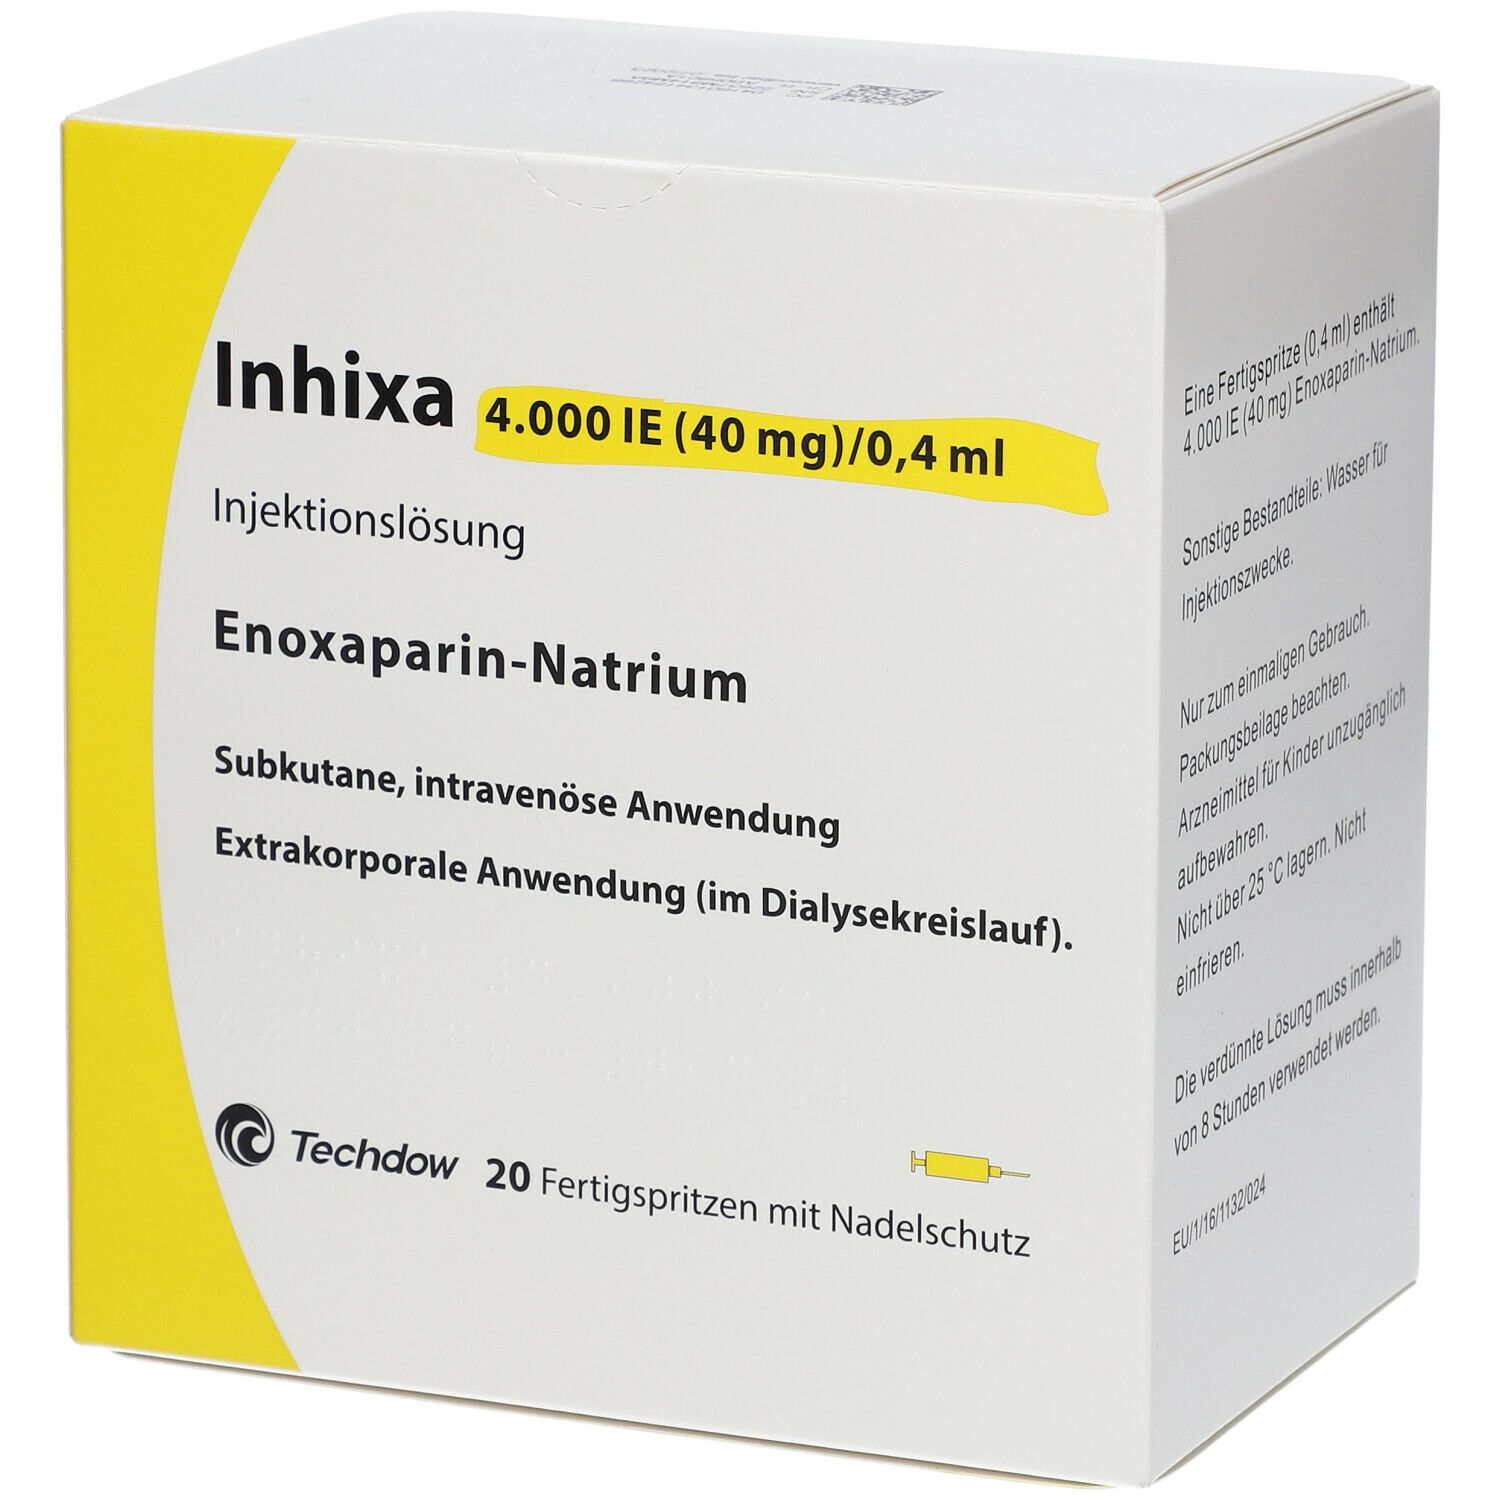 Inhixa 4.000 IE 40 mg/0,4 ml